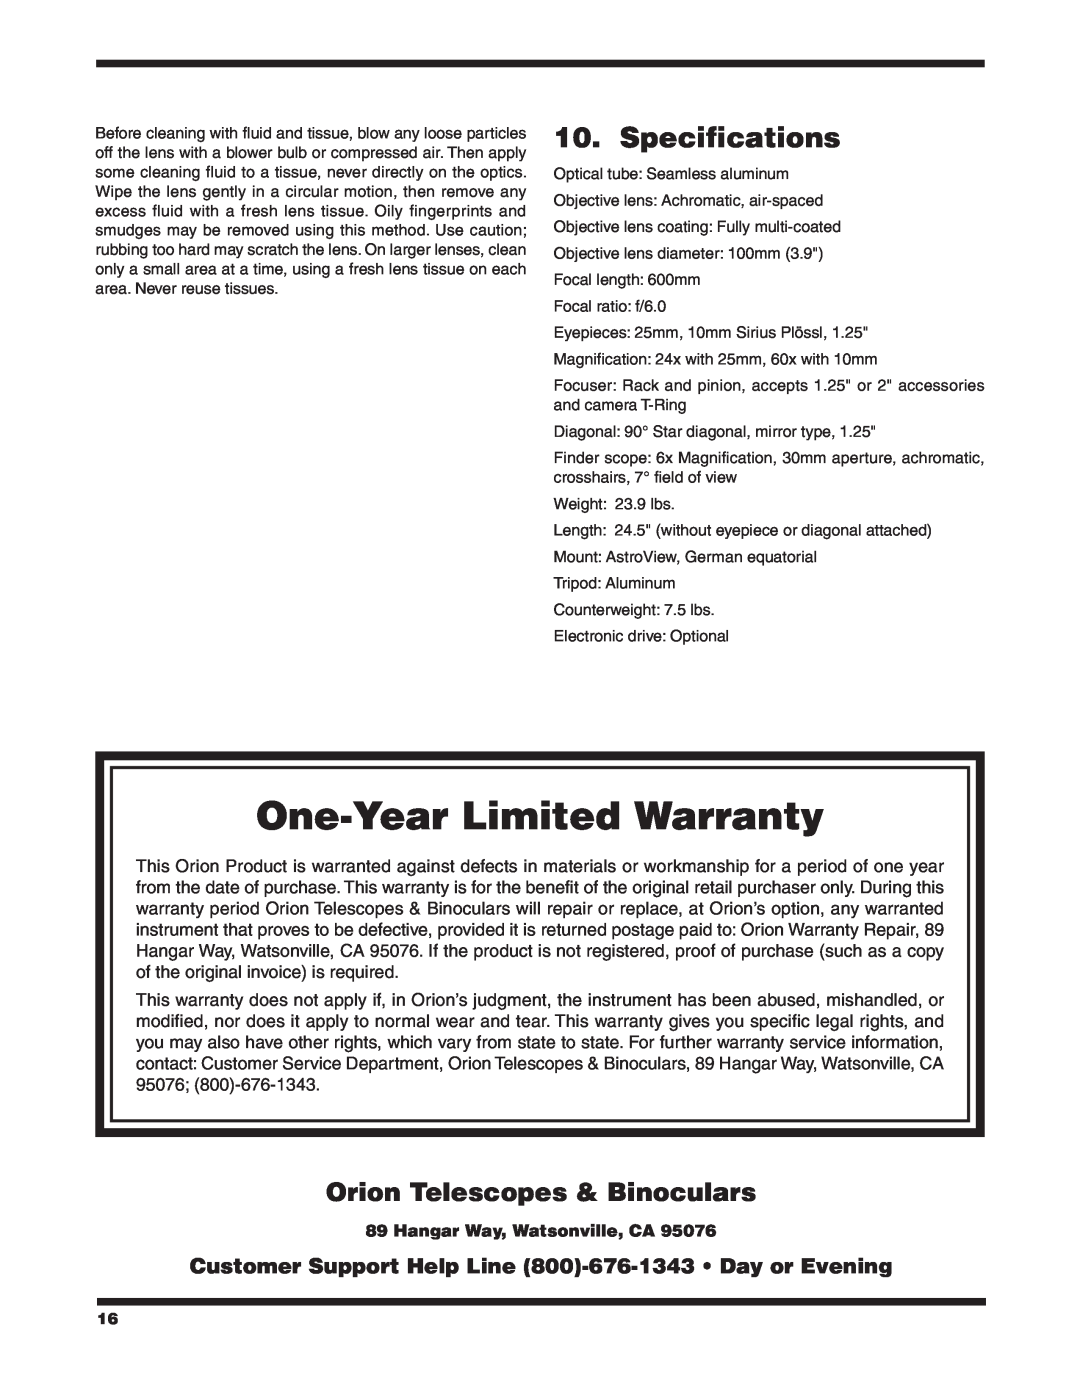 Orion 9862 Specifications, Orion Telescopes & Binoculars, One-YearLimited Warranty, Hangar Way, Watsonville, CA 